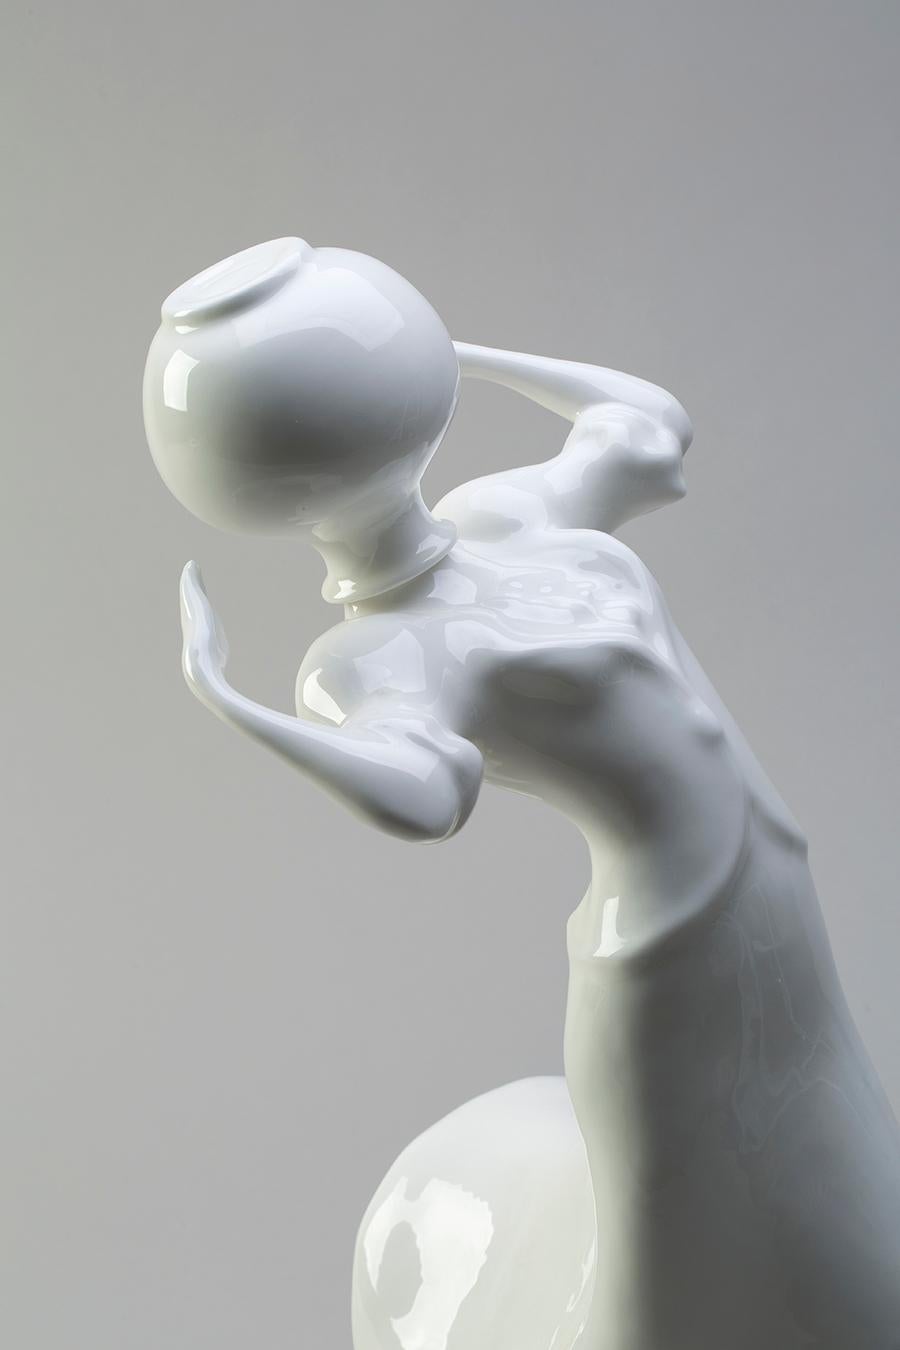 Glazed White Ceramic Sculpture by Andrea Salvatori Italy Contemporary, 21st Century For Sale